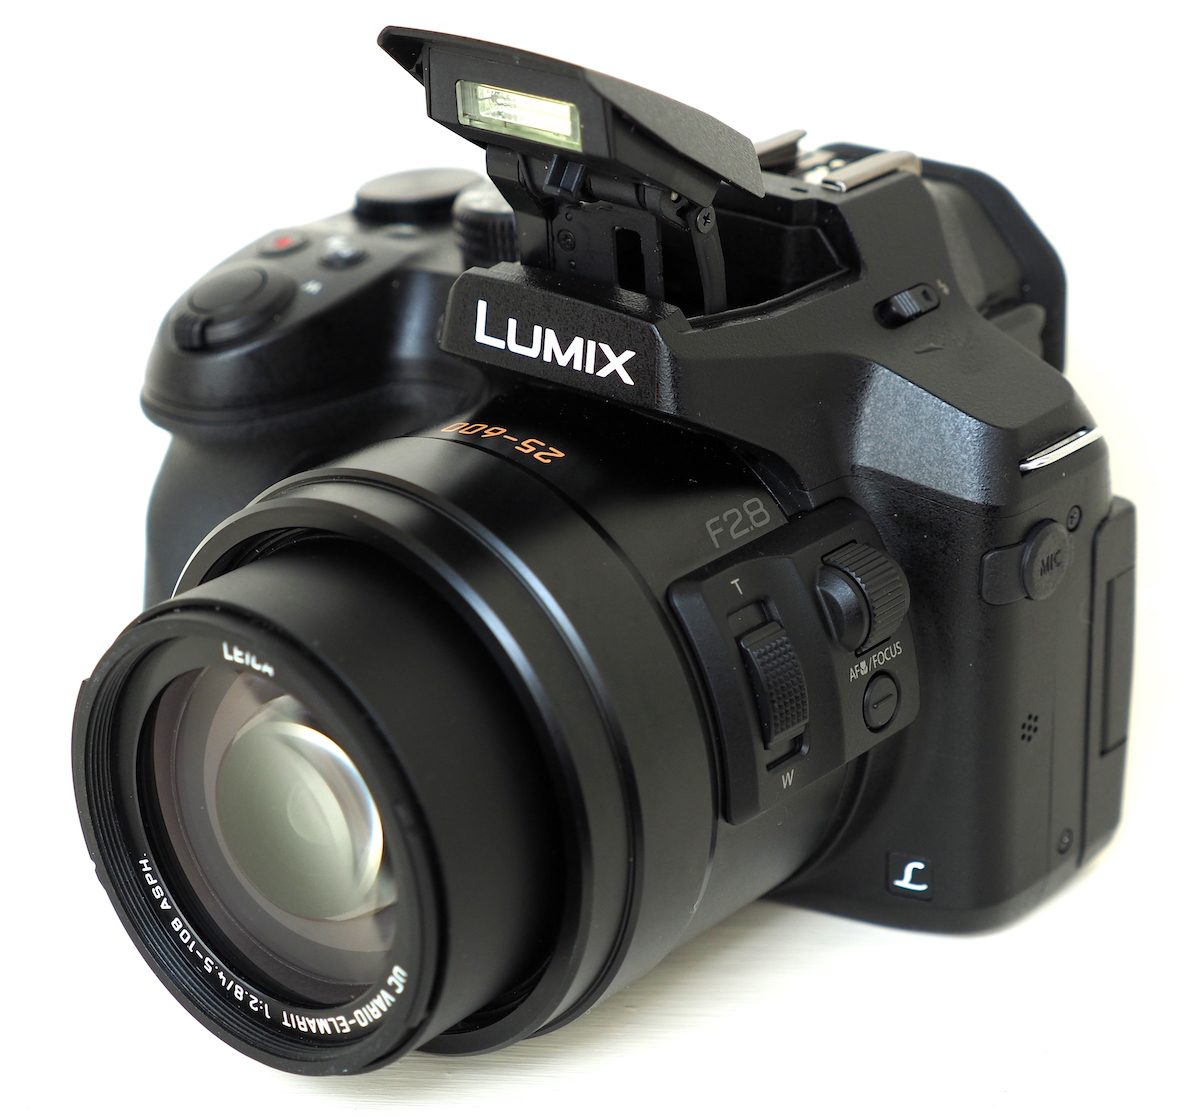 Lumix FZ-330